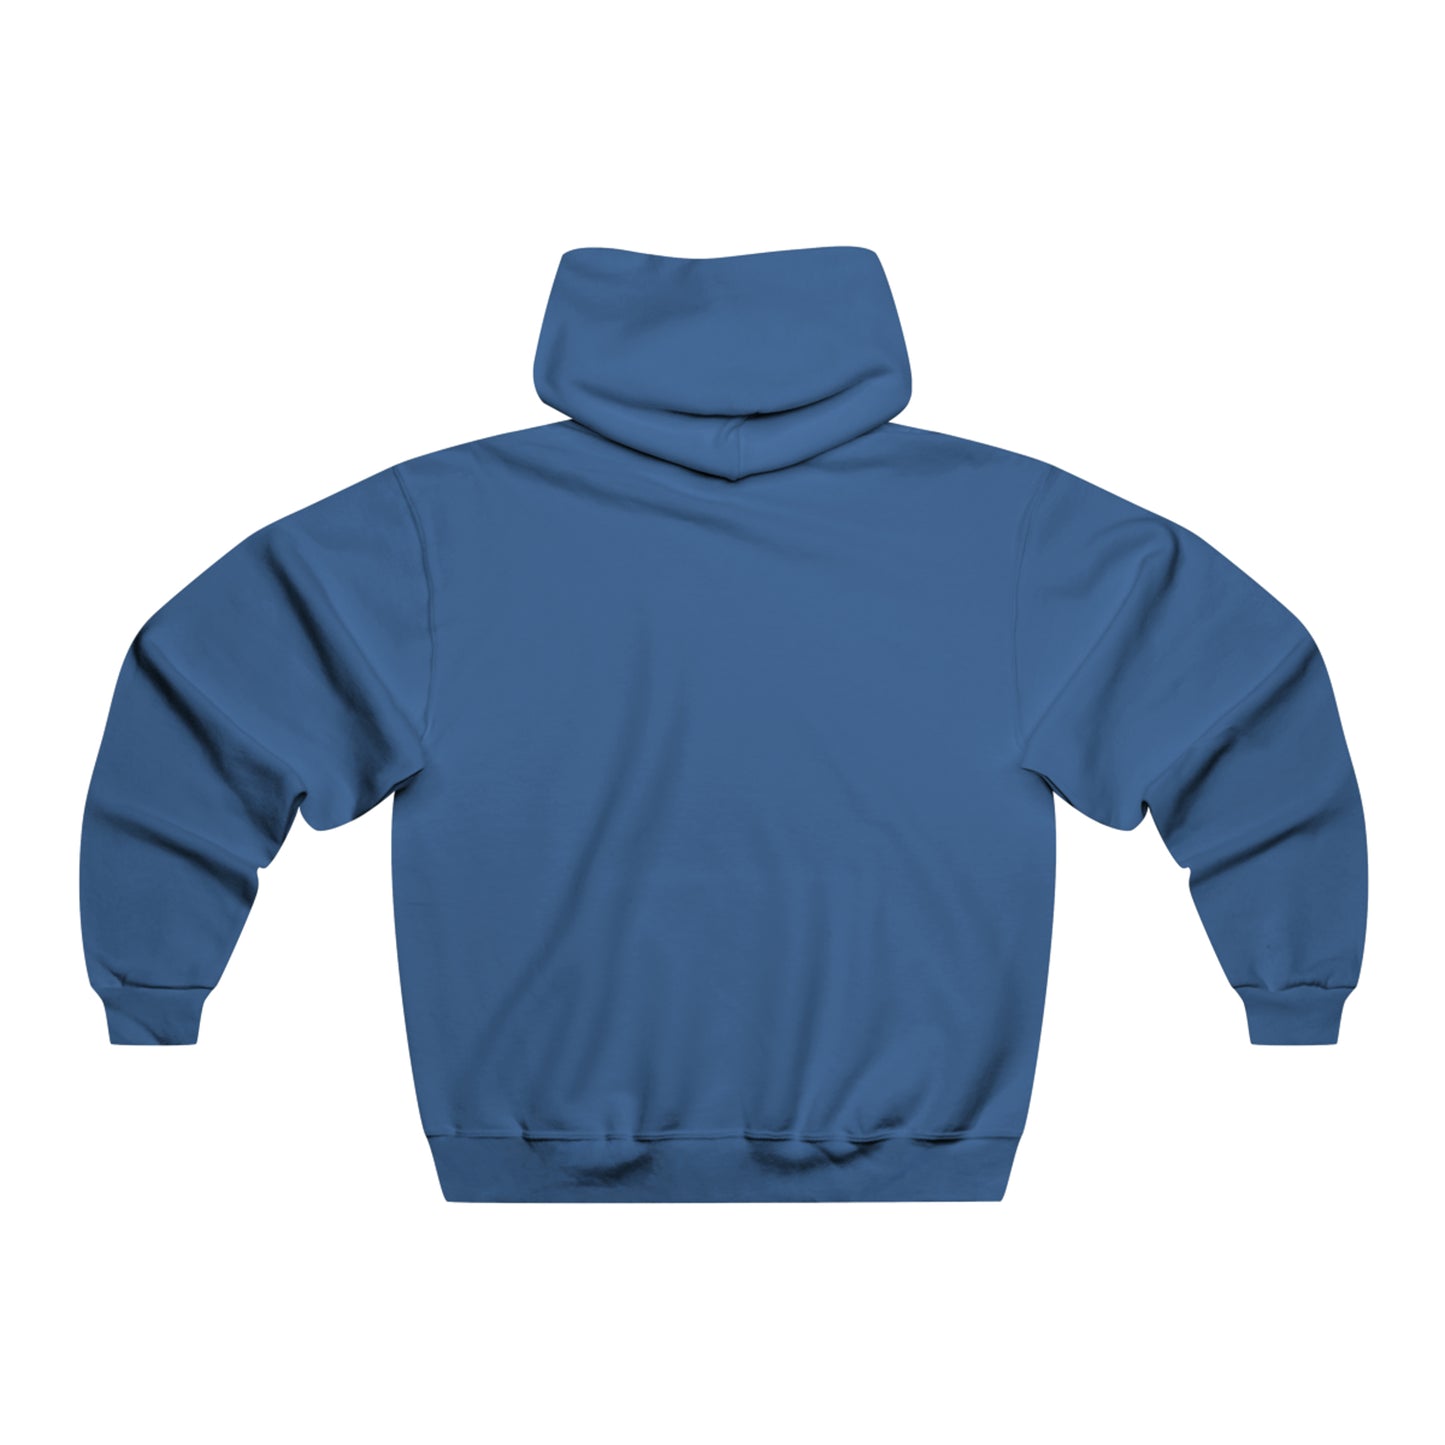 This is some Boo Sheet - Fall Halloween hooded Sweatshirt - Retro - NUBLEND Hooded Sweatshirt